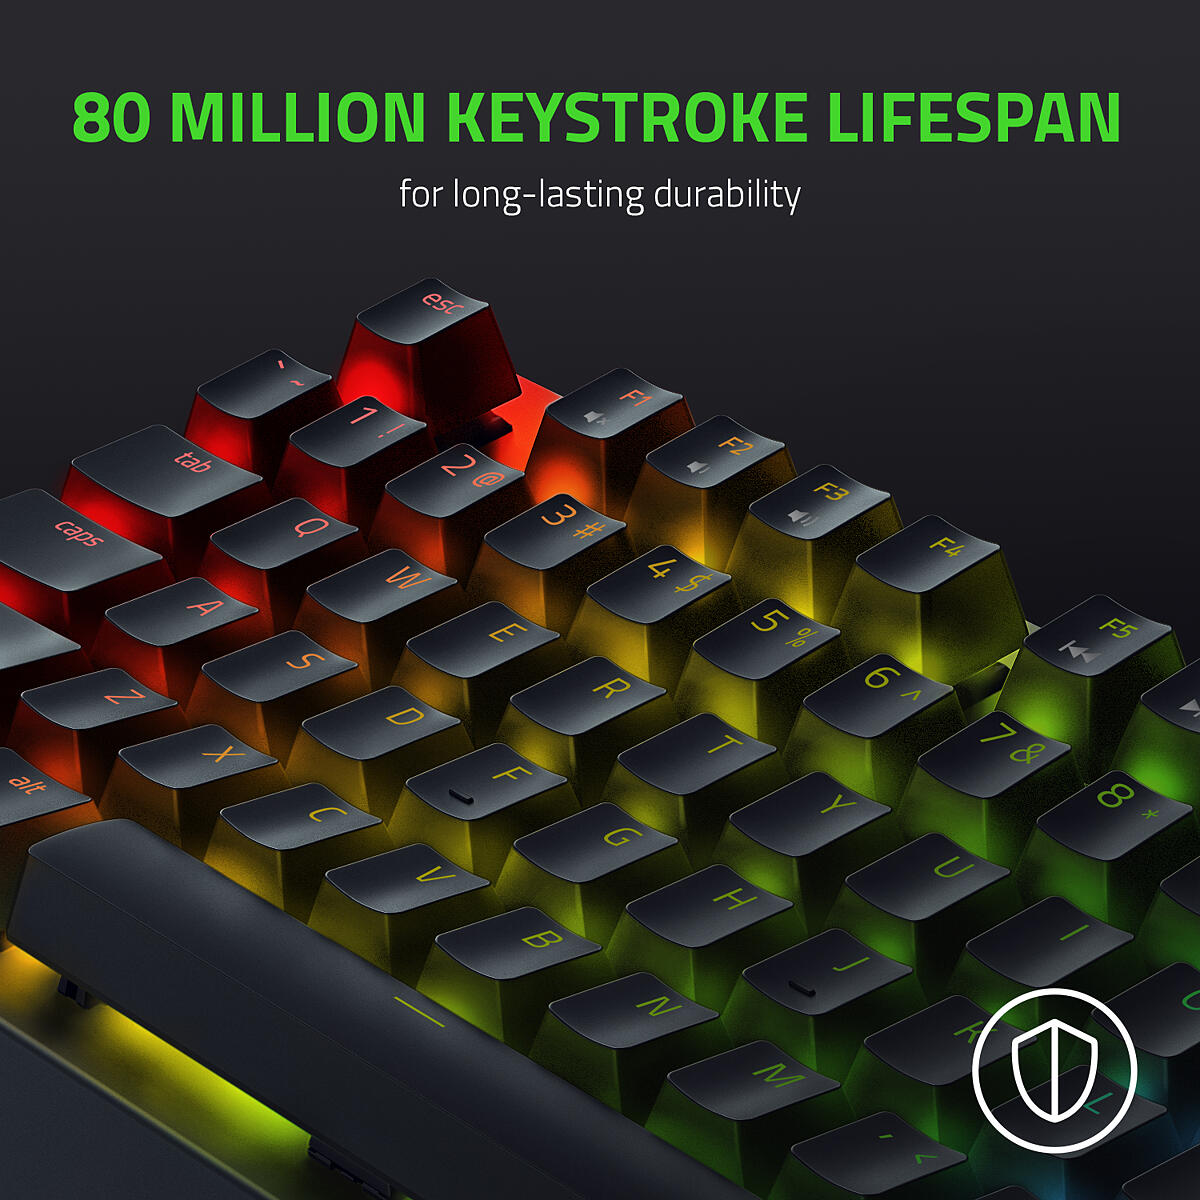 80 million keystroke lifespan for long-lasting durability